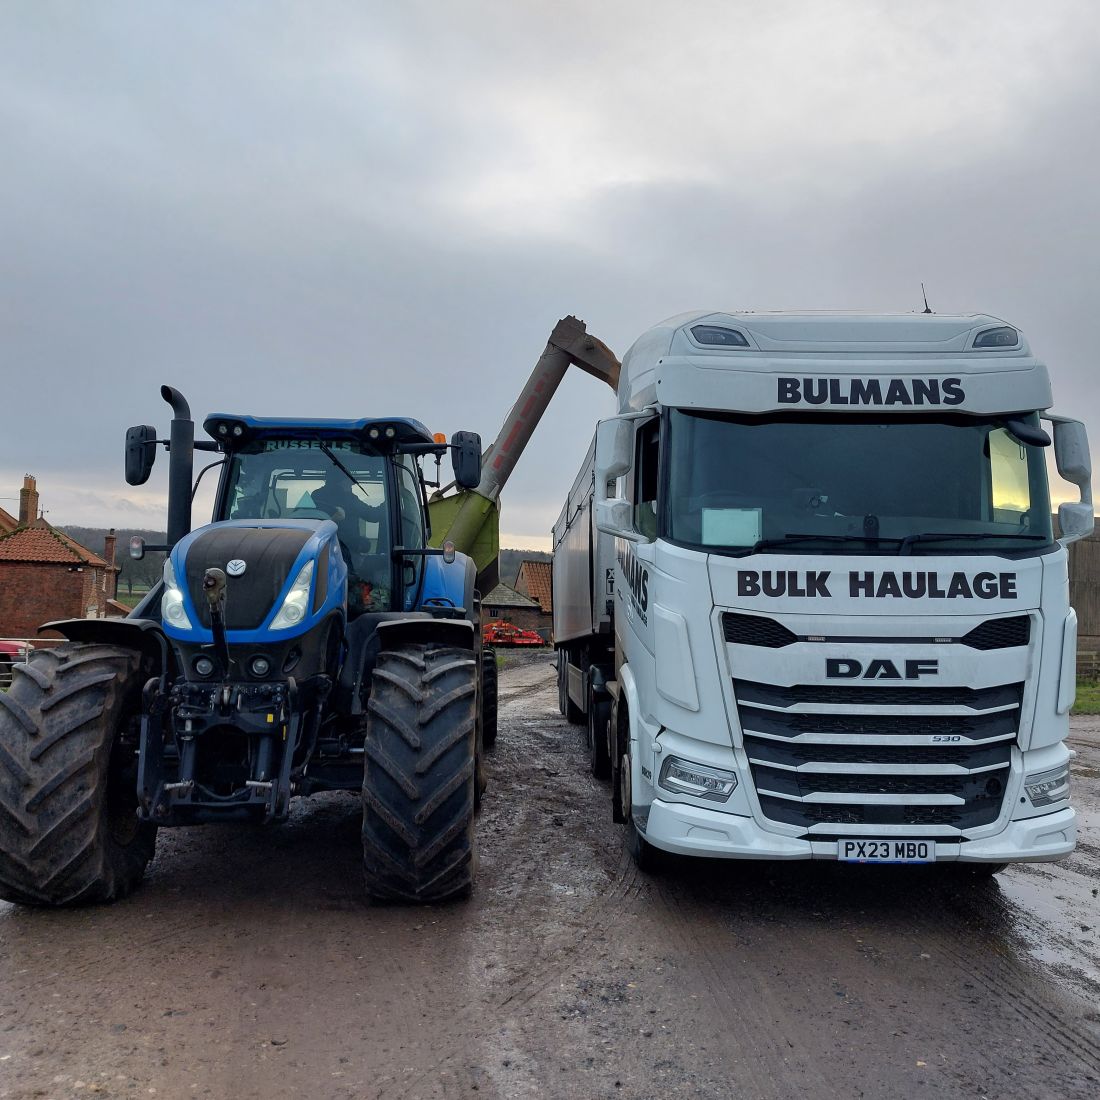 A Bulmans Bulk Haulage DAF truck is being loaded by a blue tractor on a farm.